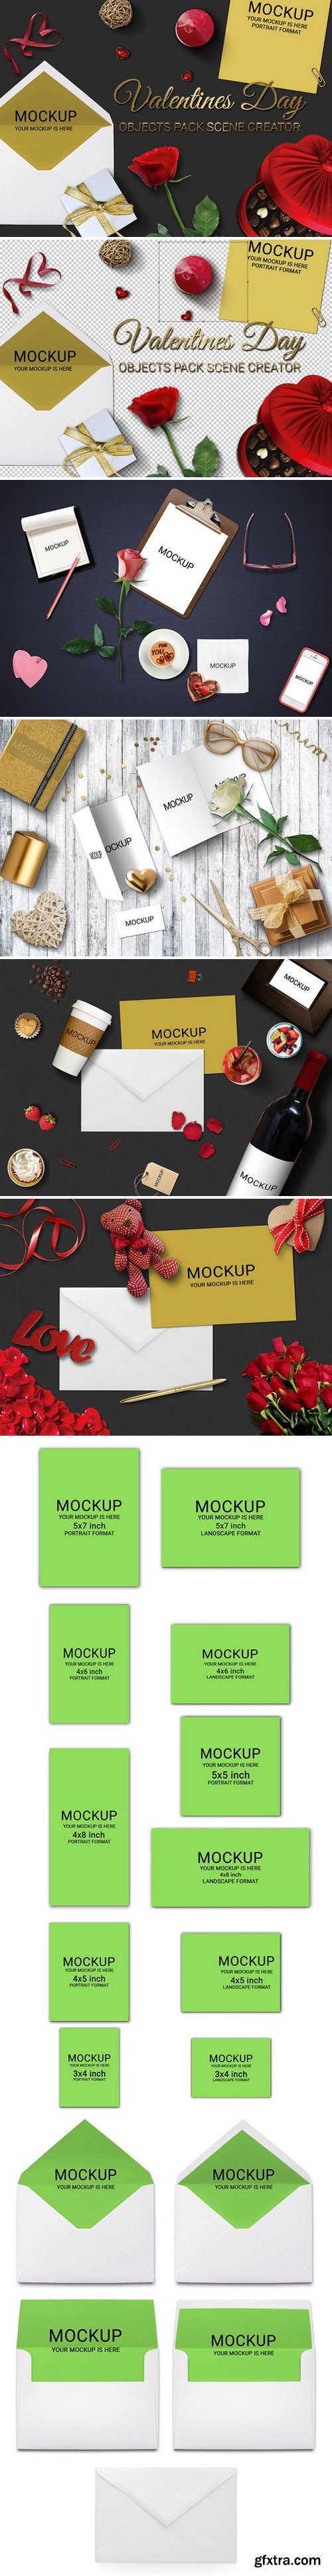 CM - Valentines Day Scene Creator MockUp 2257426